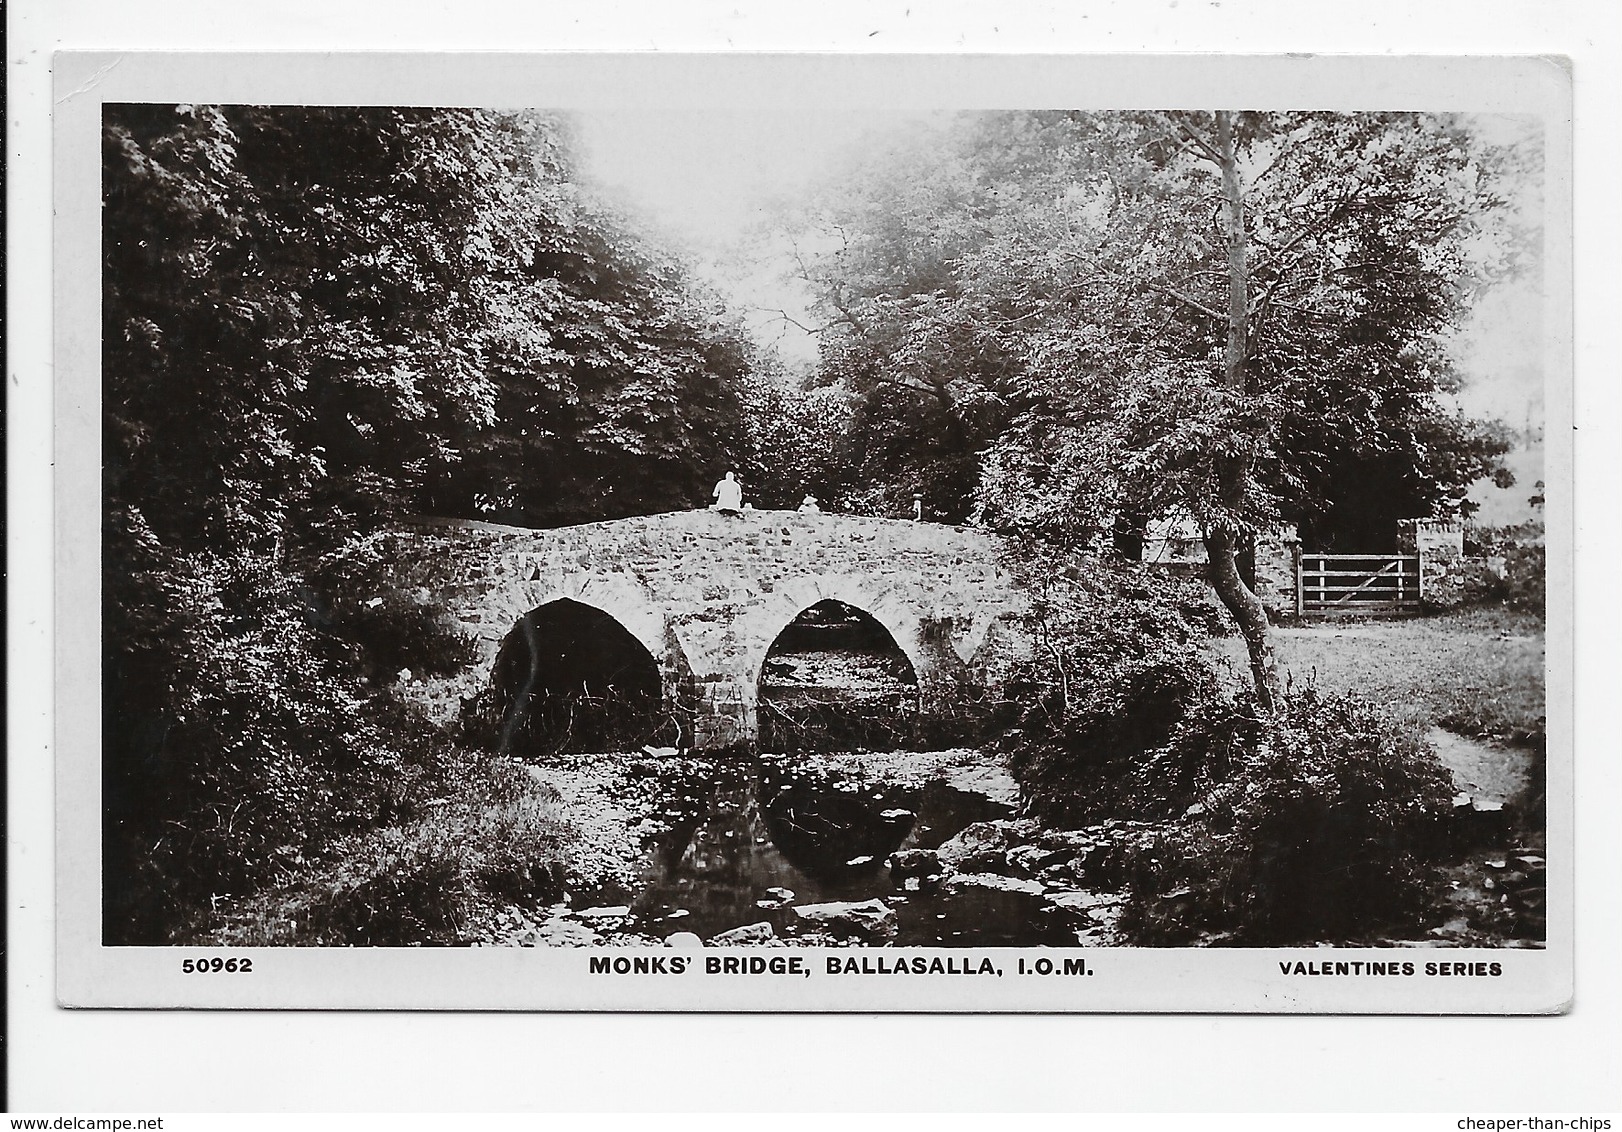 Monks' Bridge, Ballasalla, I.O.M. - Valentine XL 50962 - Isle Of Man